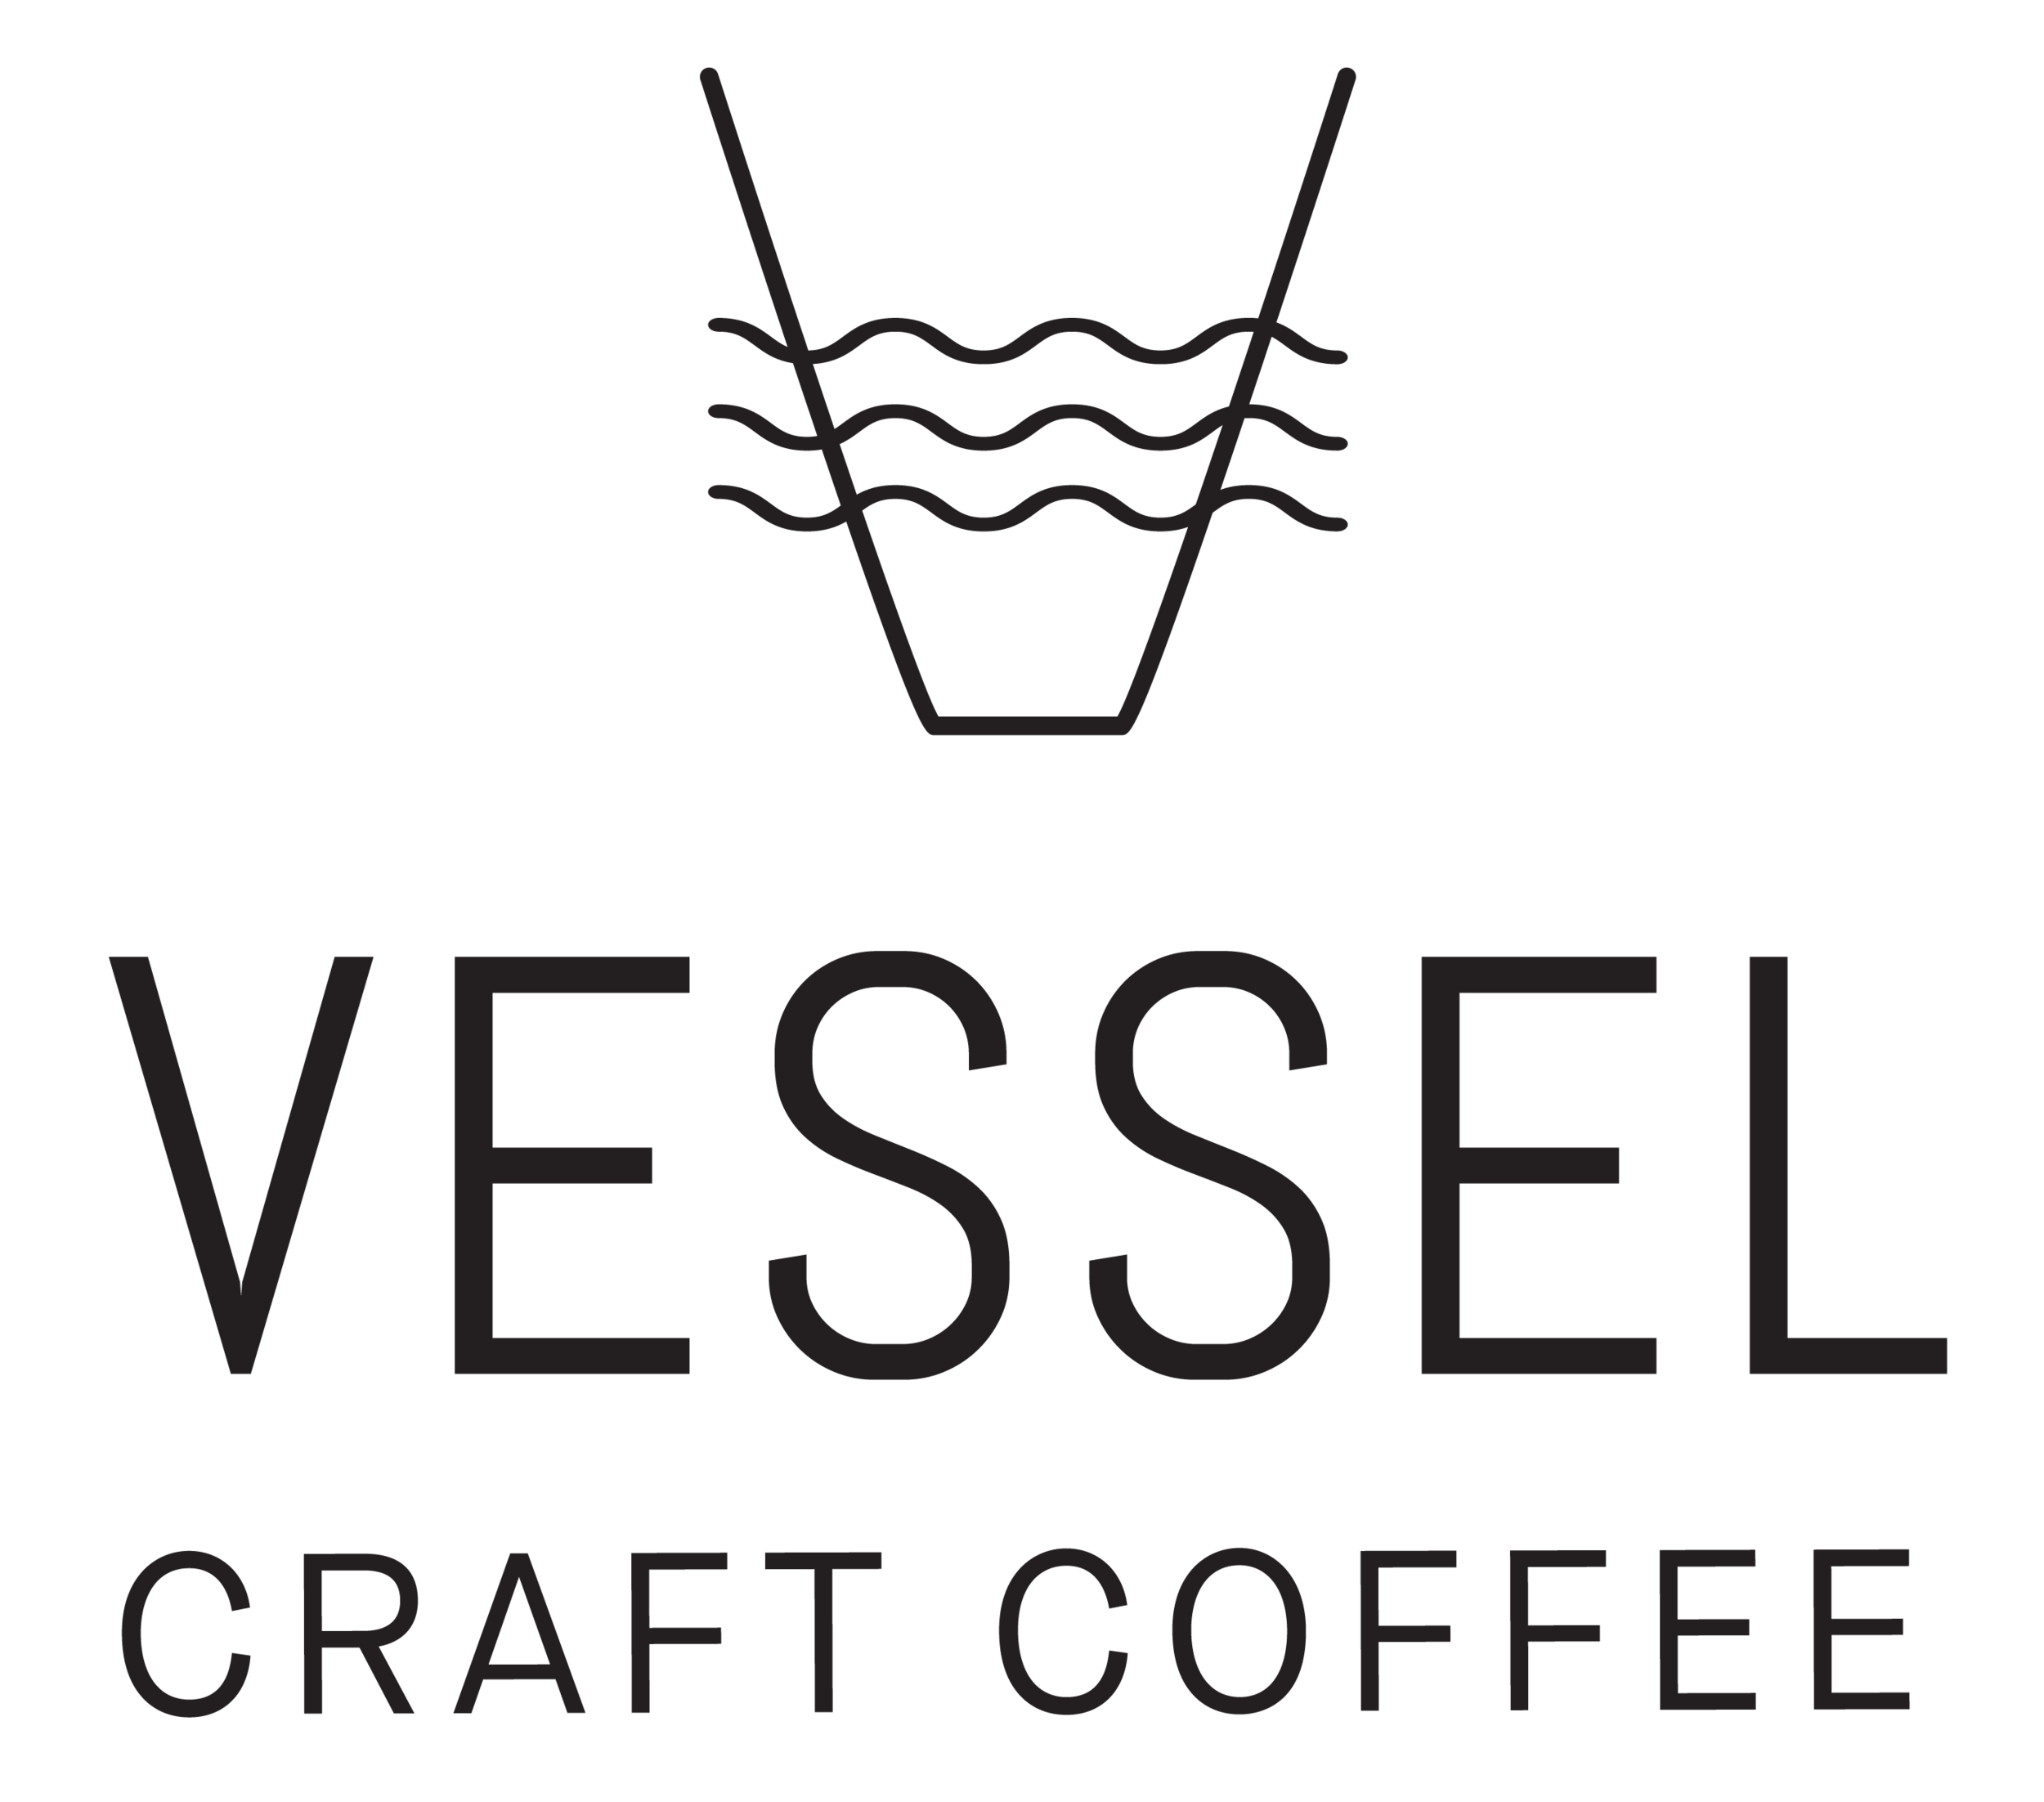 Vessel Craft Coffee